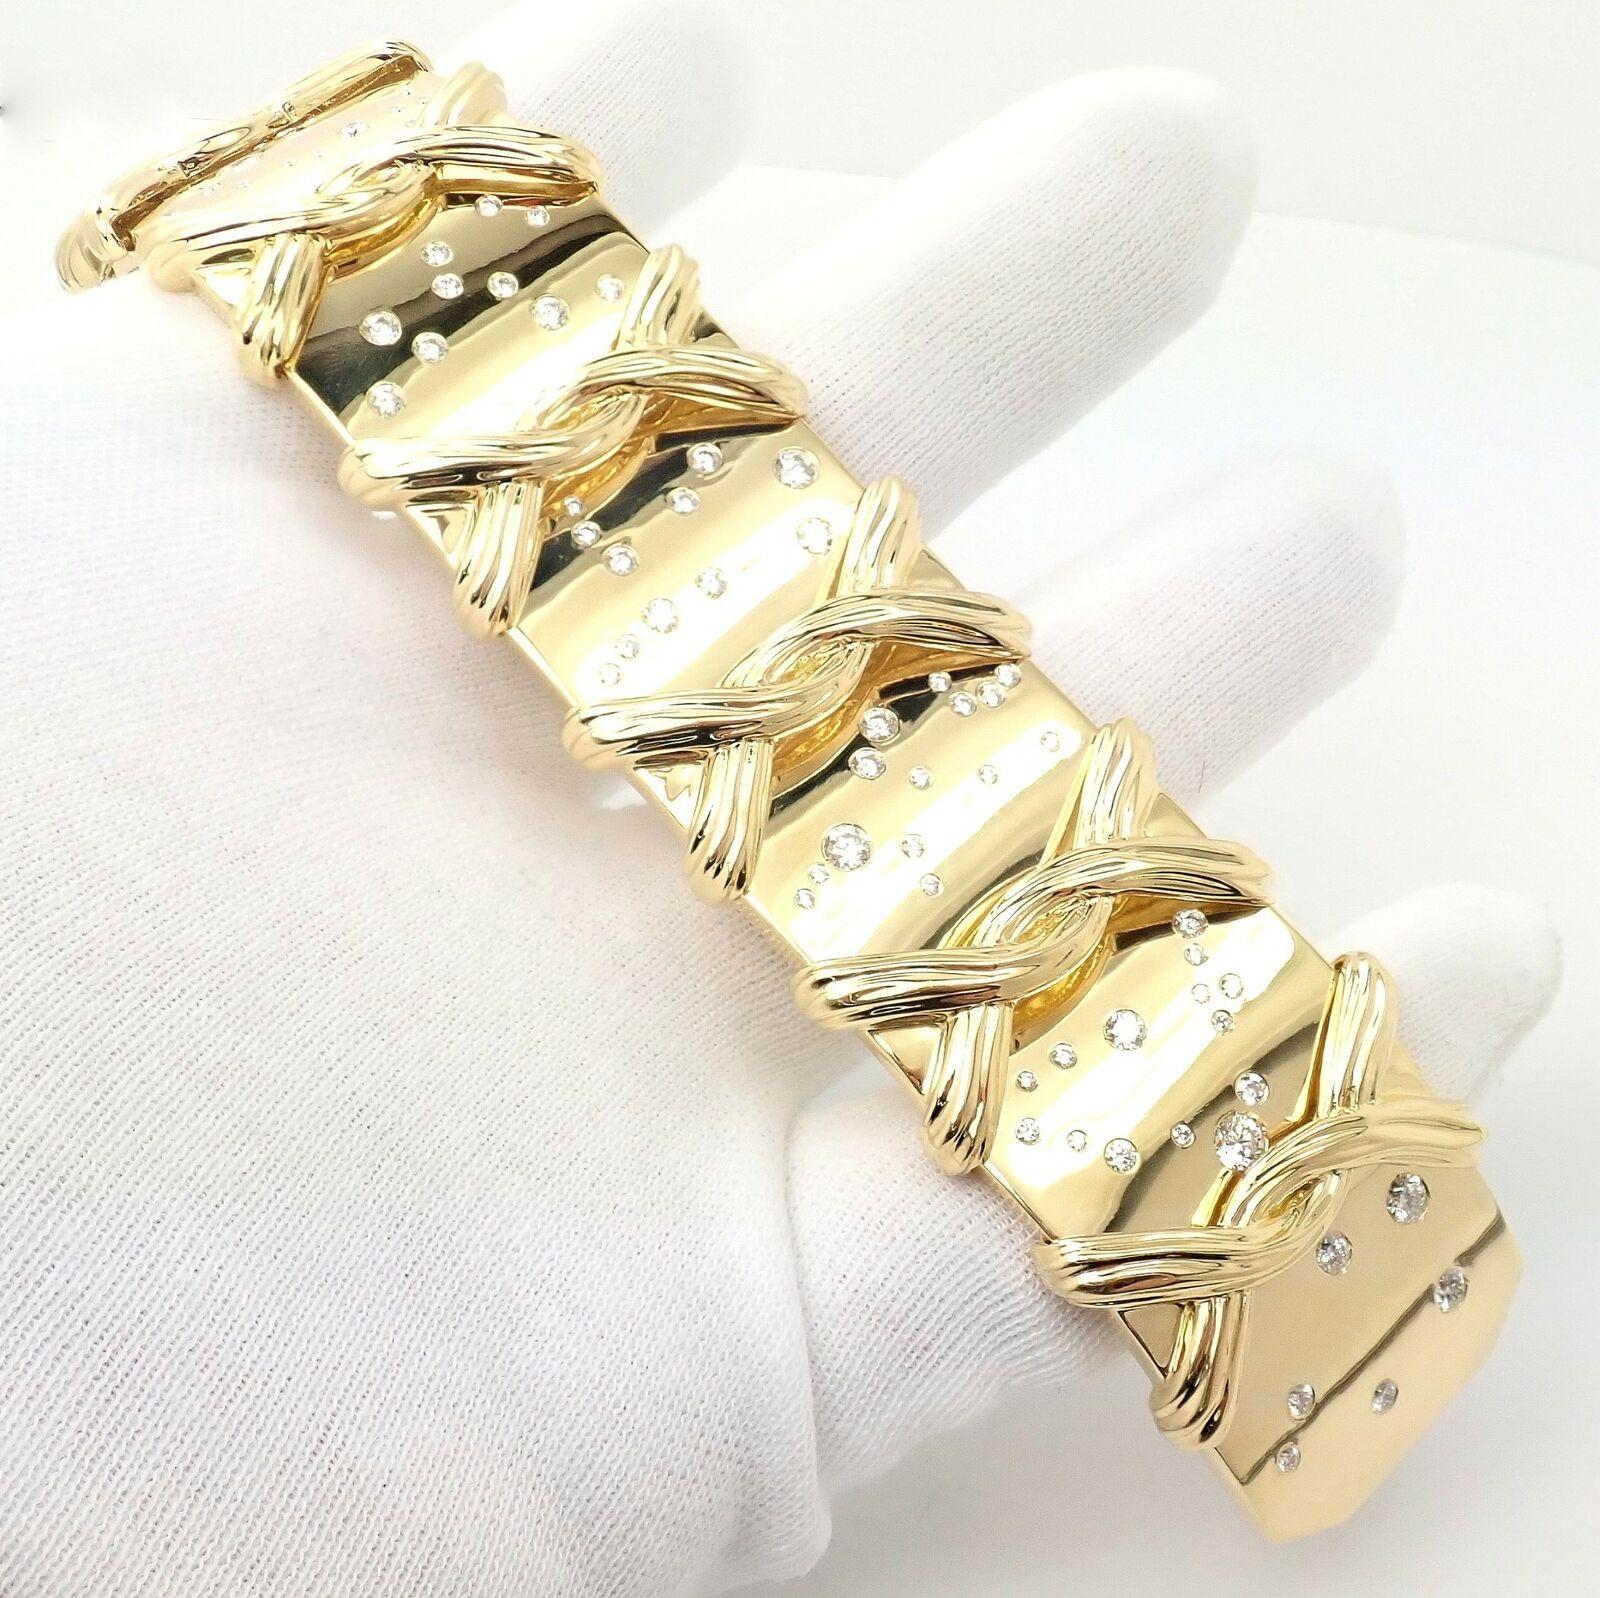 Brilliant Cut Verdura Diamond Constellation Wide Yellow Gold Bangle Bracelet